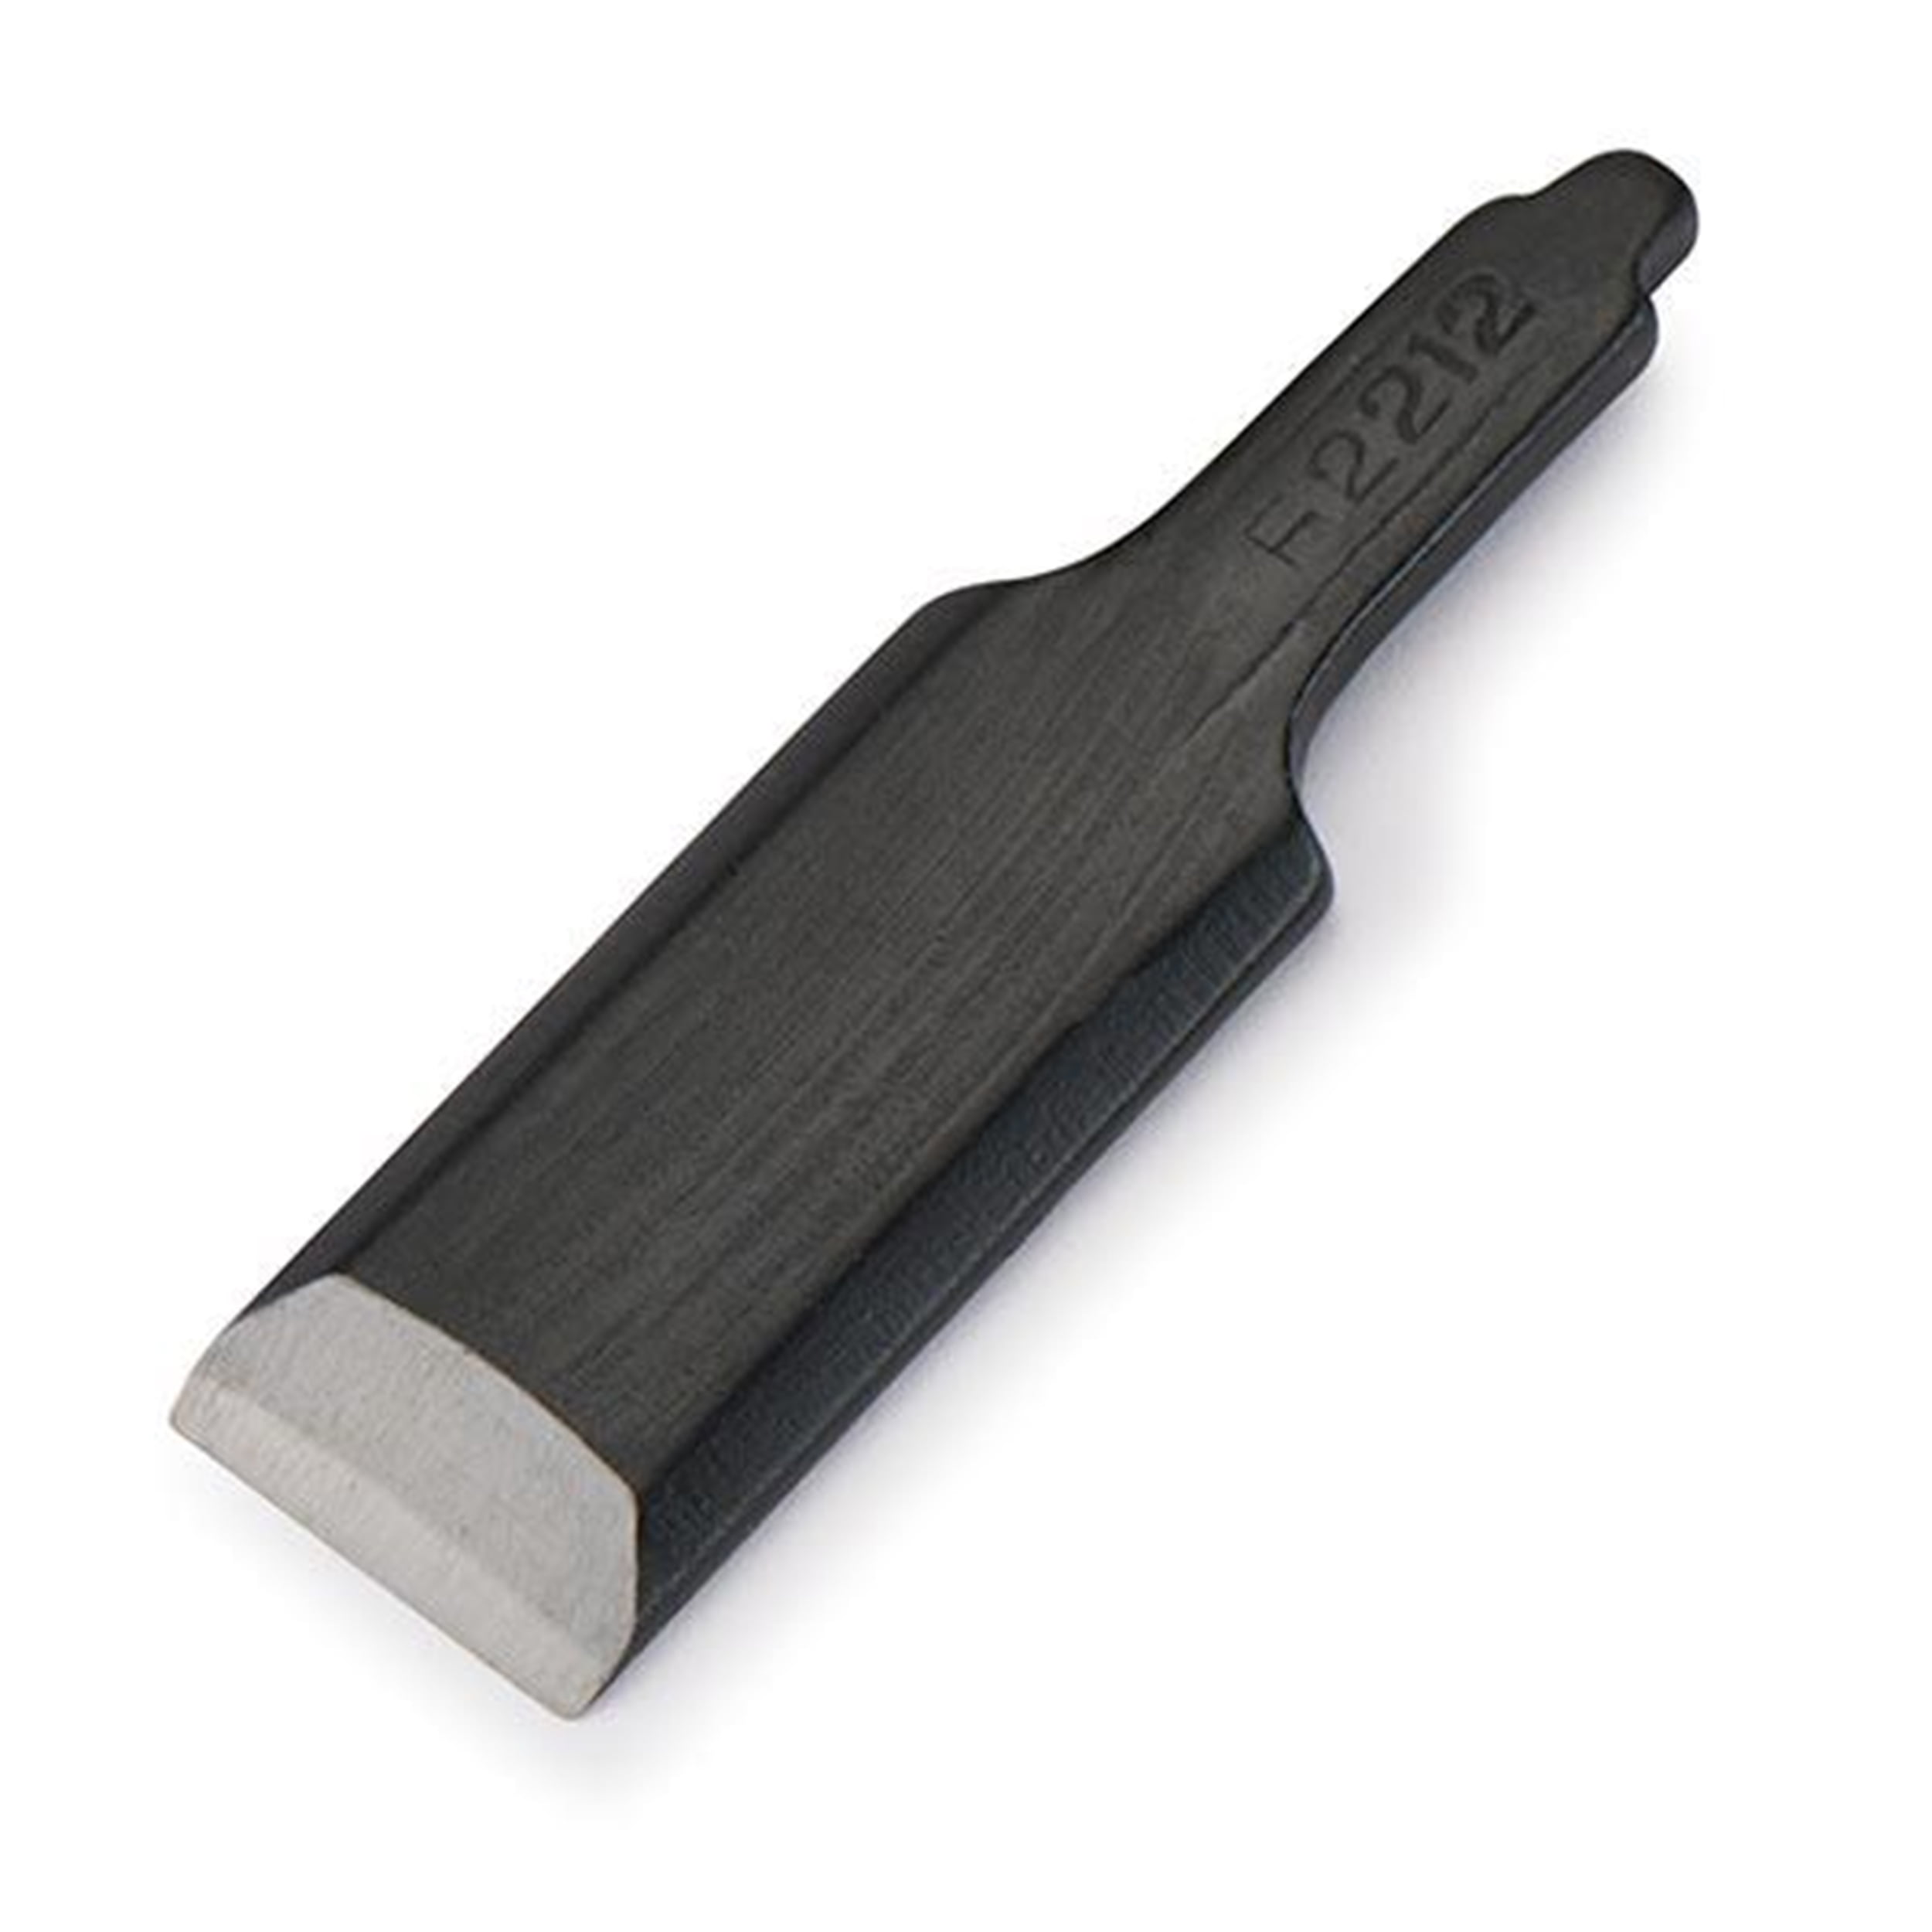 Flat 12mm Blade for HCT-30A Power Carver - Automach - Walmart.com